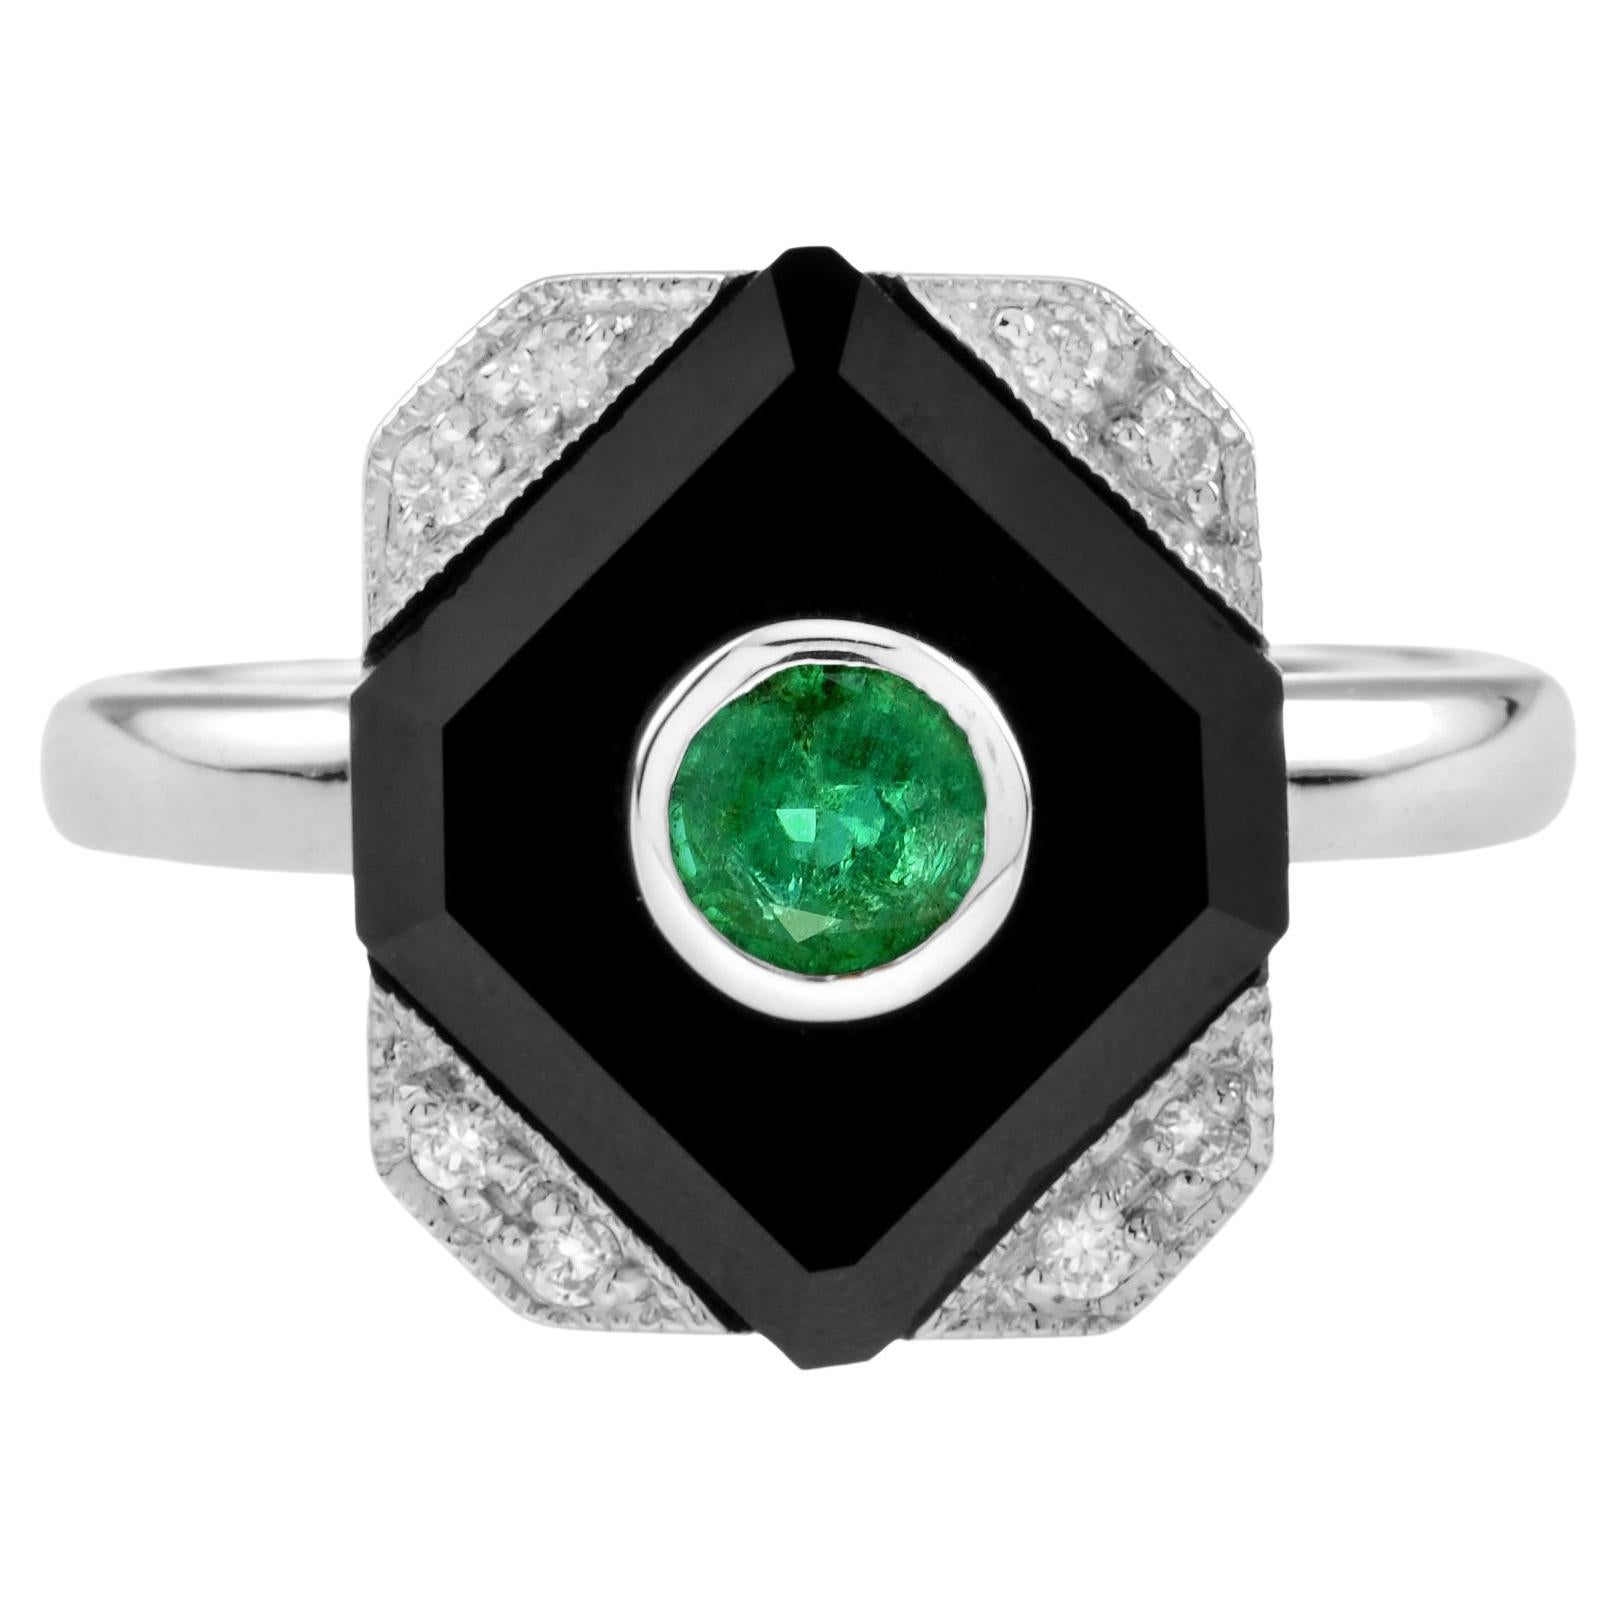 Emerald Onyx Diamond Art Deco Style Square Shape Ring in 14K White Gold